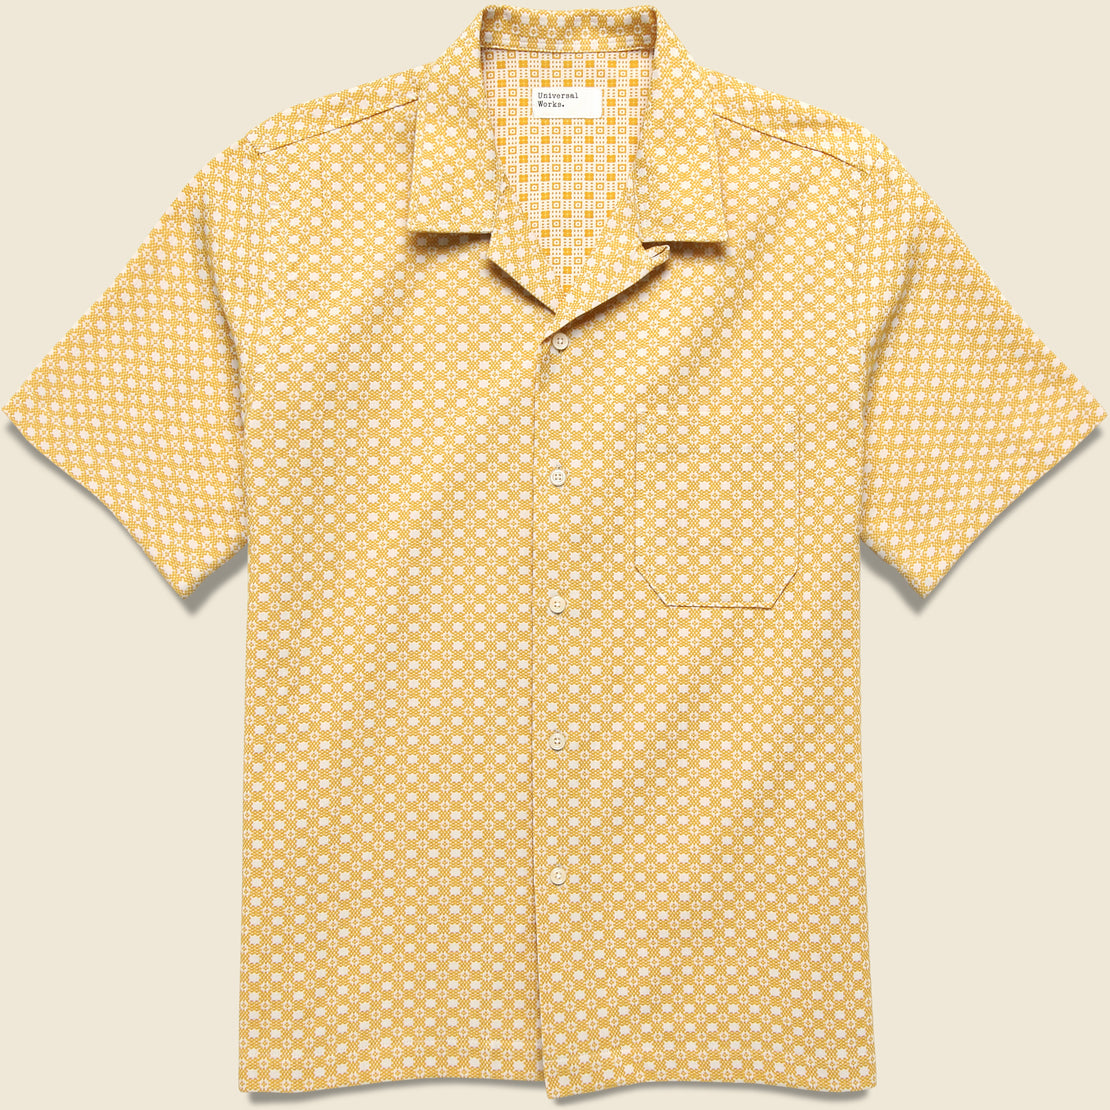 Universal Works Tile Road Shirt - Yellow/White